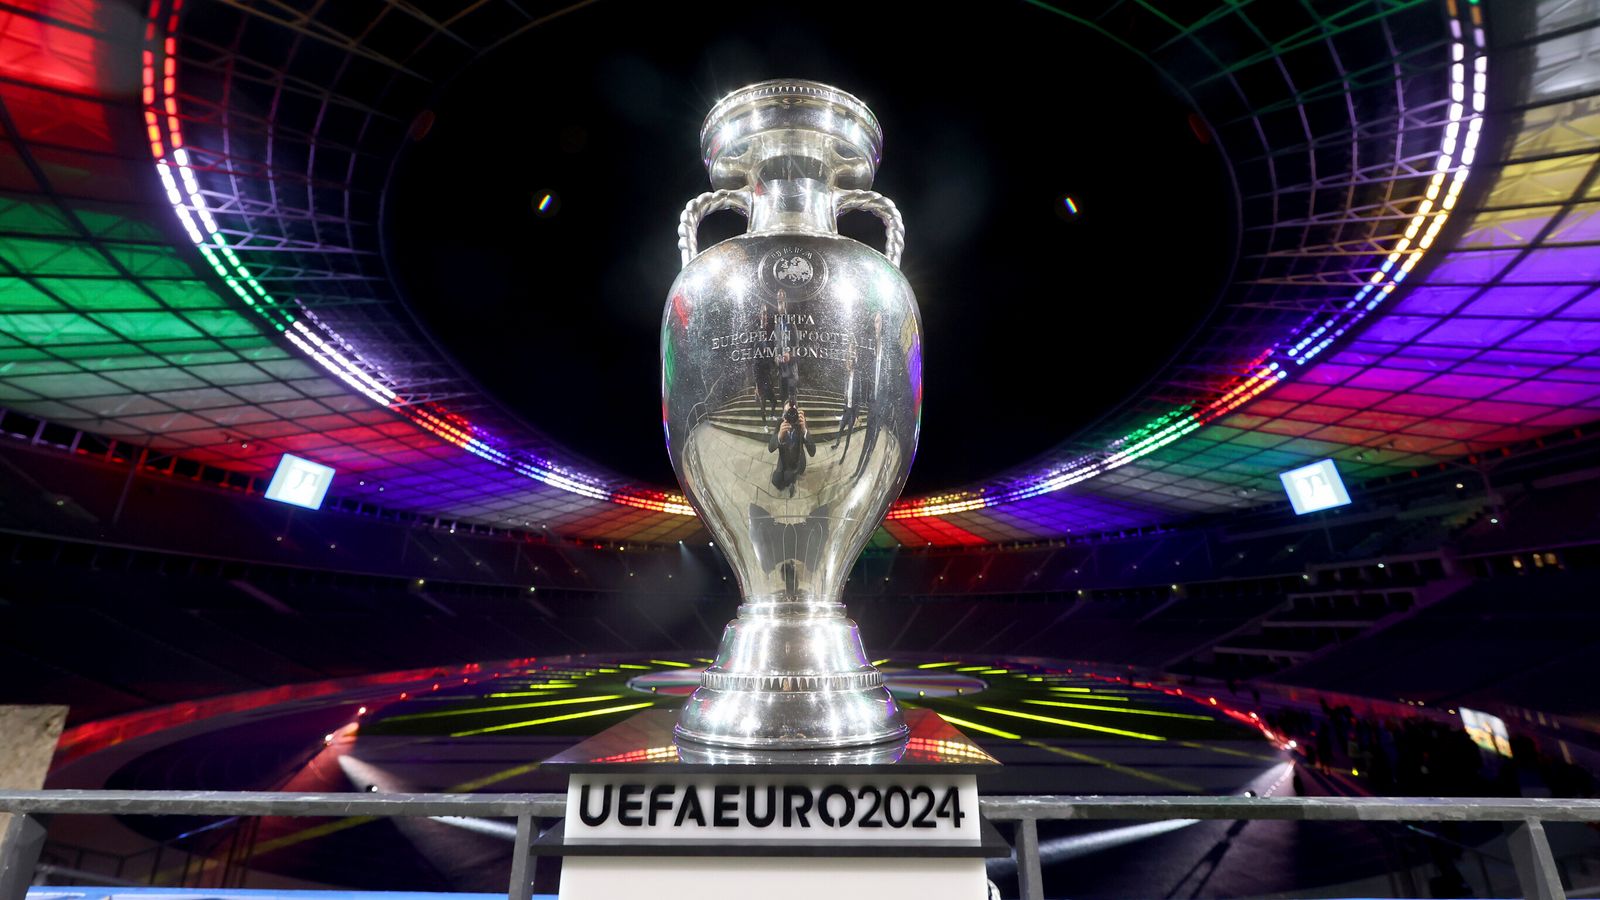 Kvalifikace na Euro 2024: výsledky, rozpisy a program |  Tabulky pro Anglii, Wales, Skotsko, Irskou republiku a Severní Irsko |  fotbalové zprávy